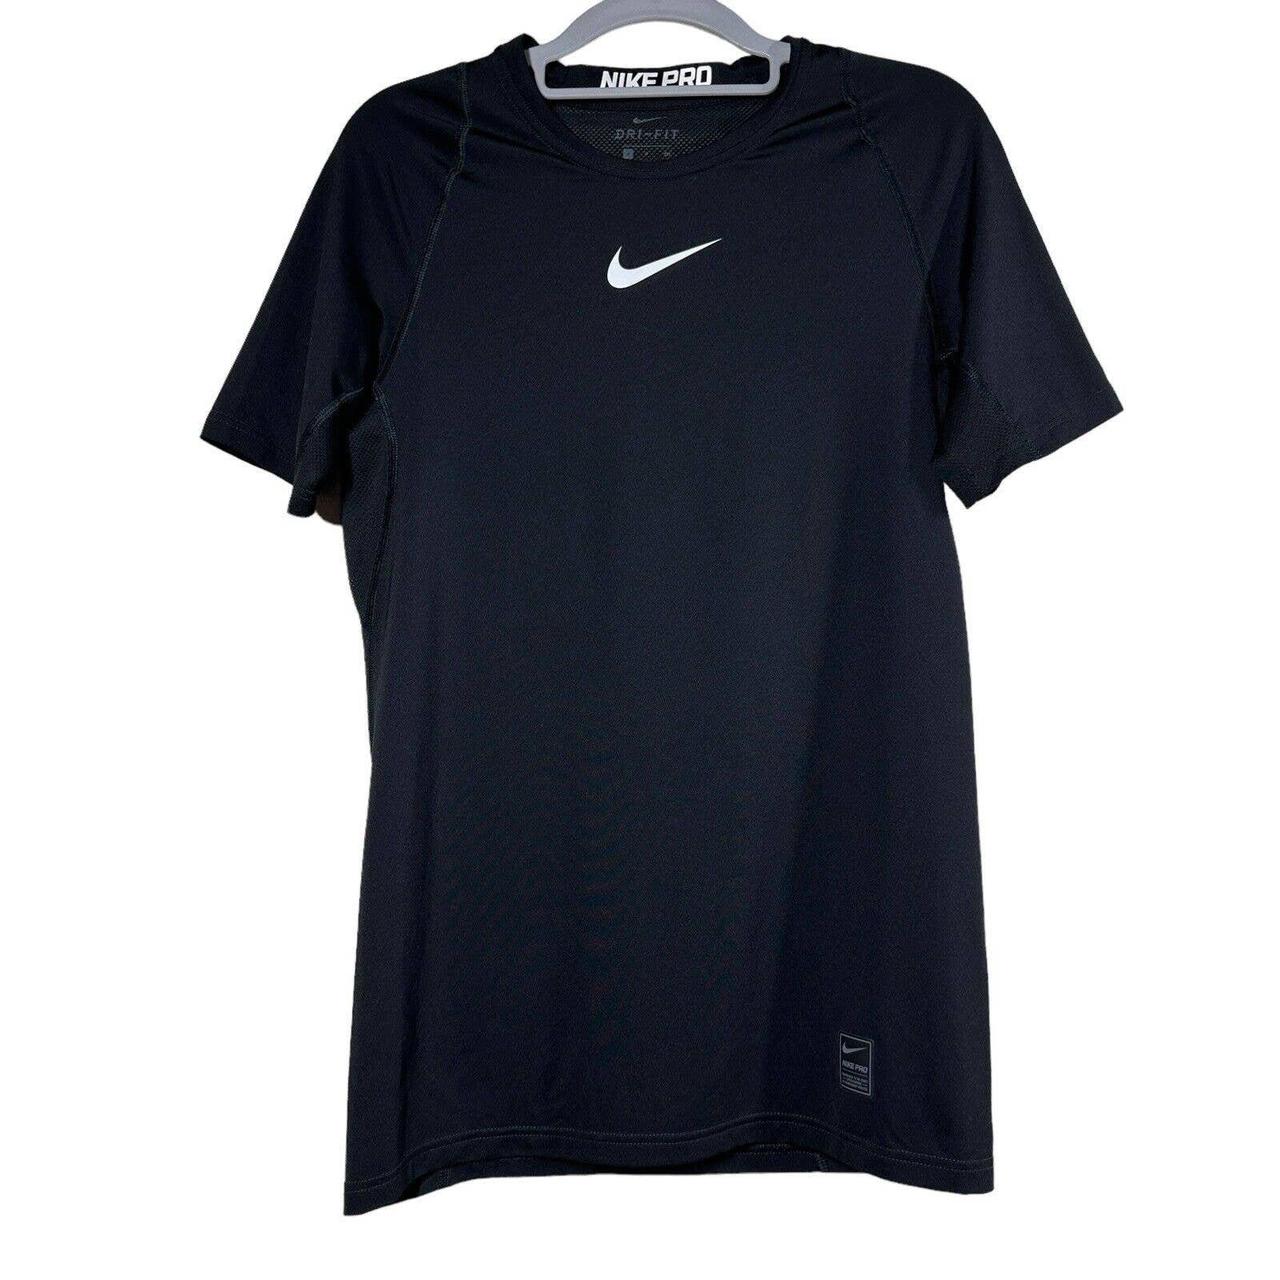 Nike Pro Dri Fit T Shirt Men's Size S Black Fitted... - Depop